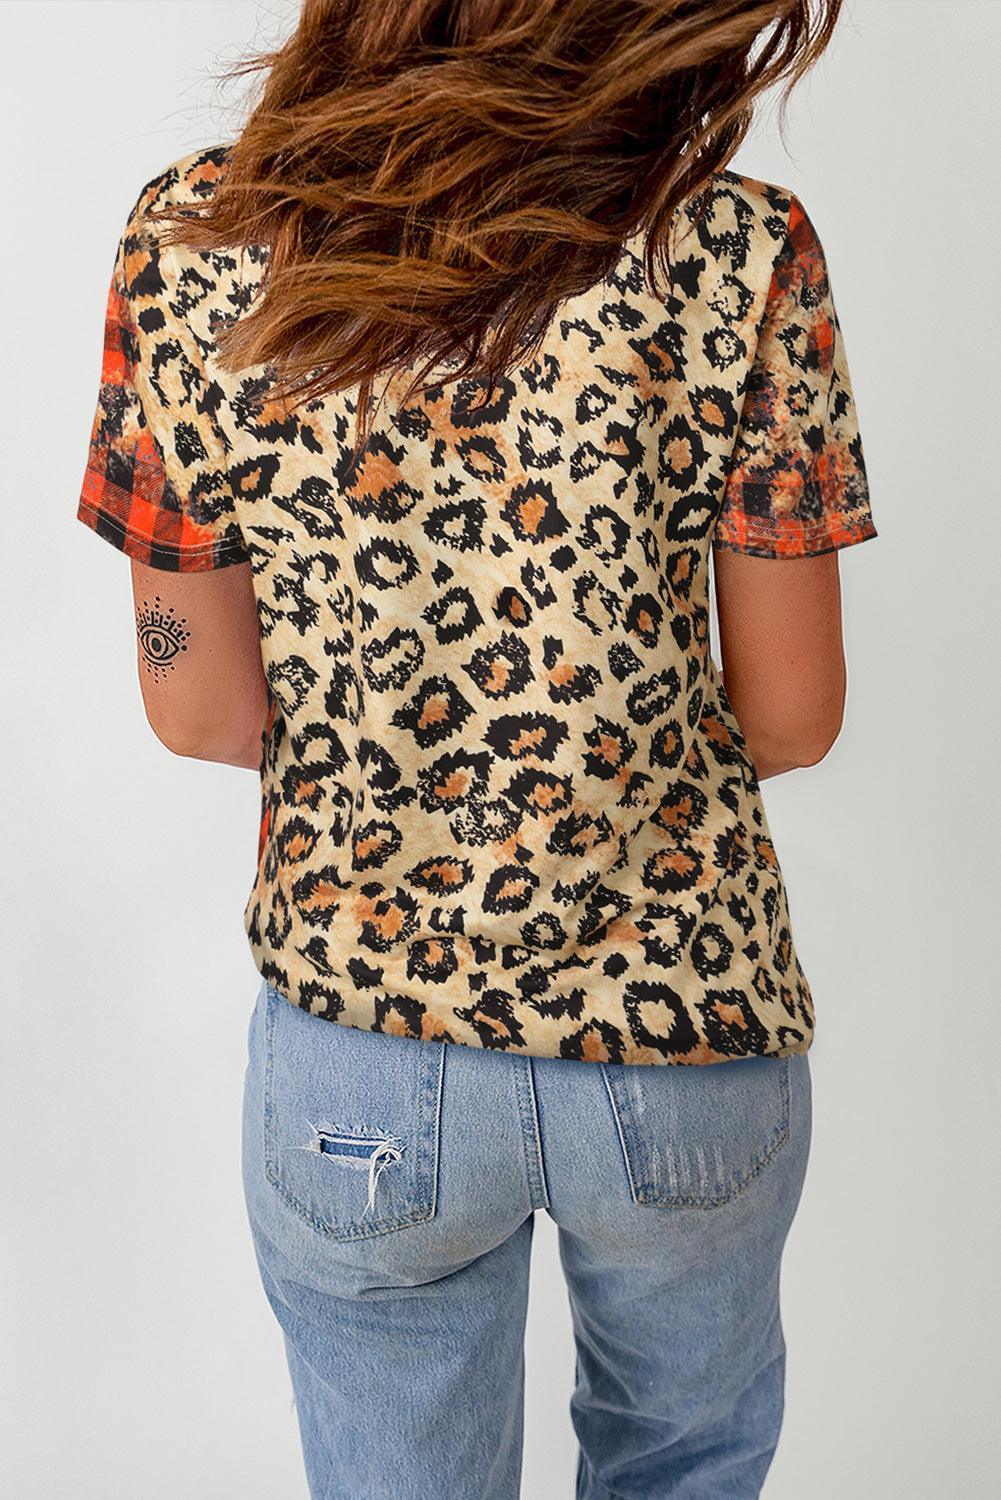 Leopard Mama Heart Shaped Plaid Graphic Crew Neck T Shirt - Ninonine